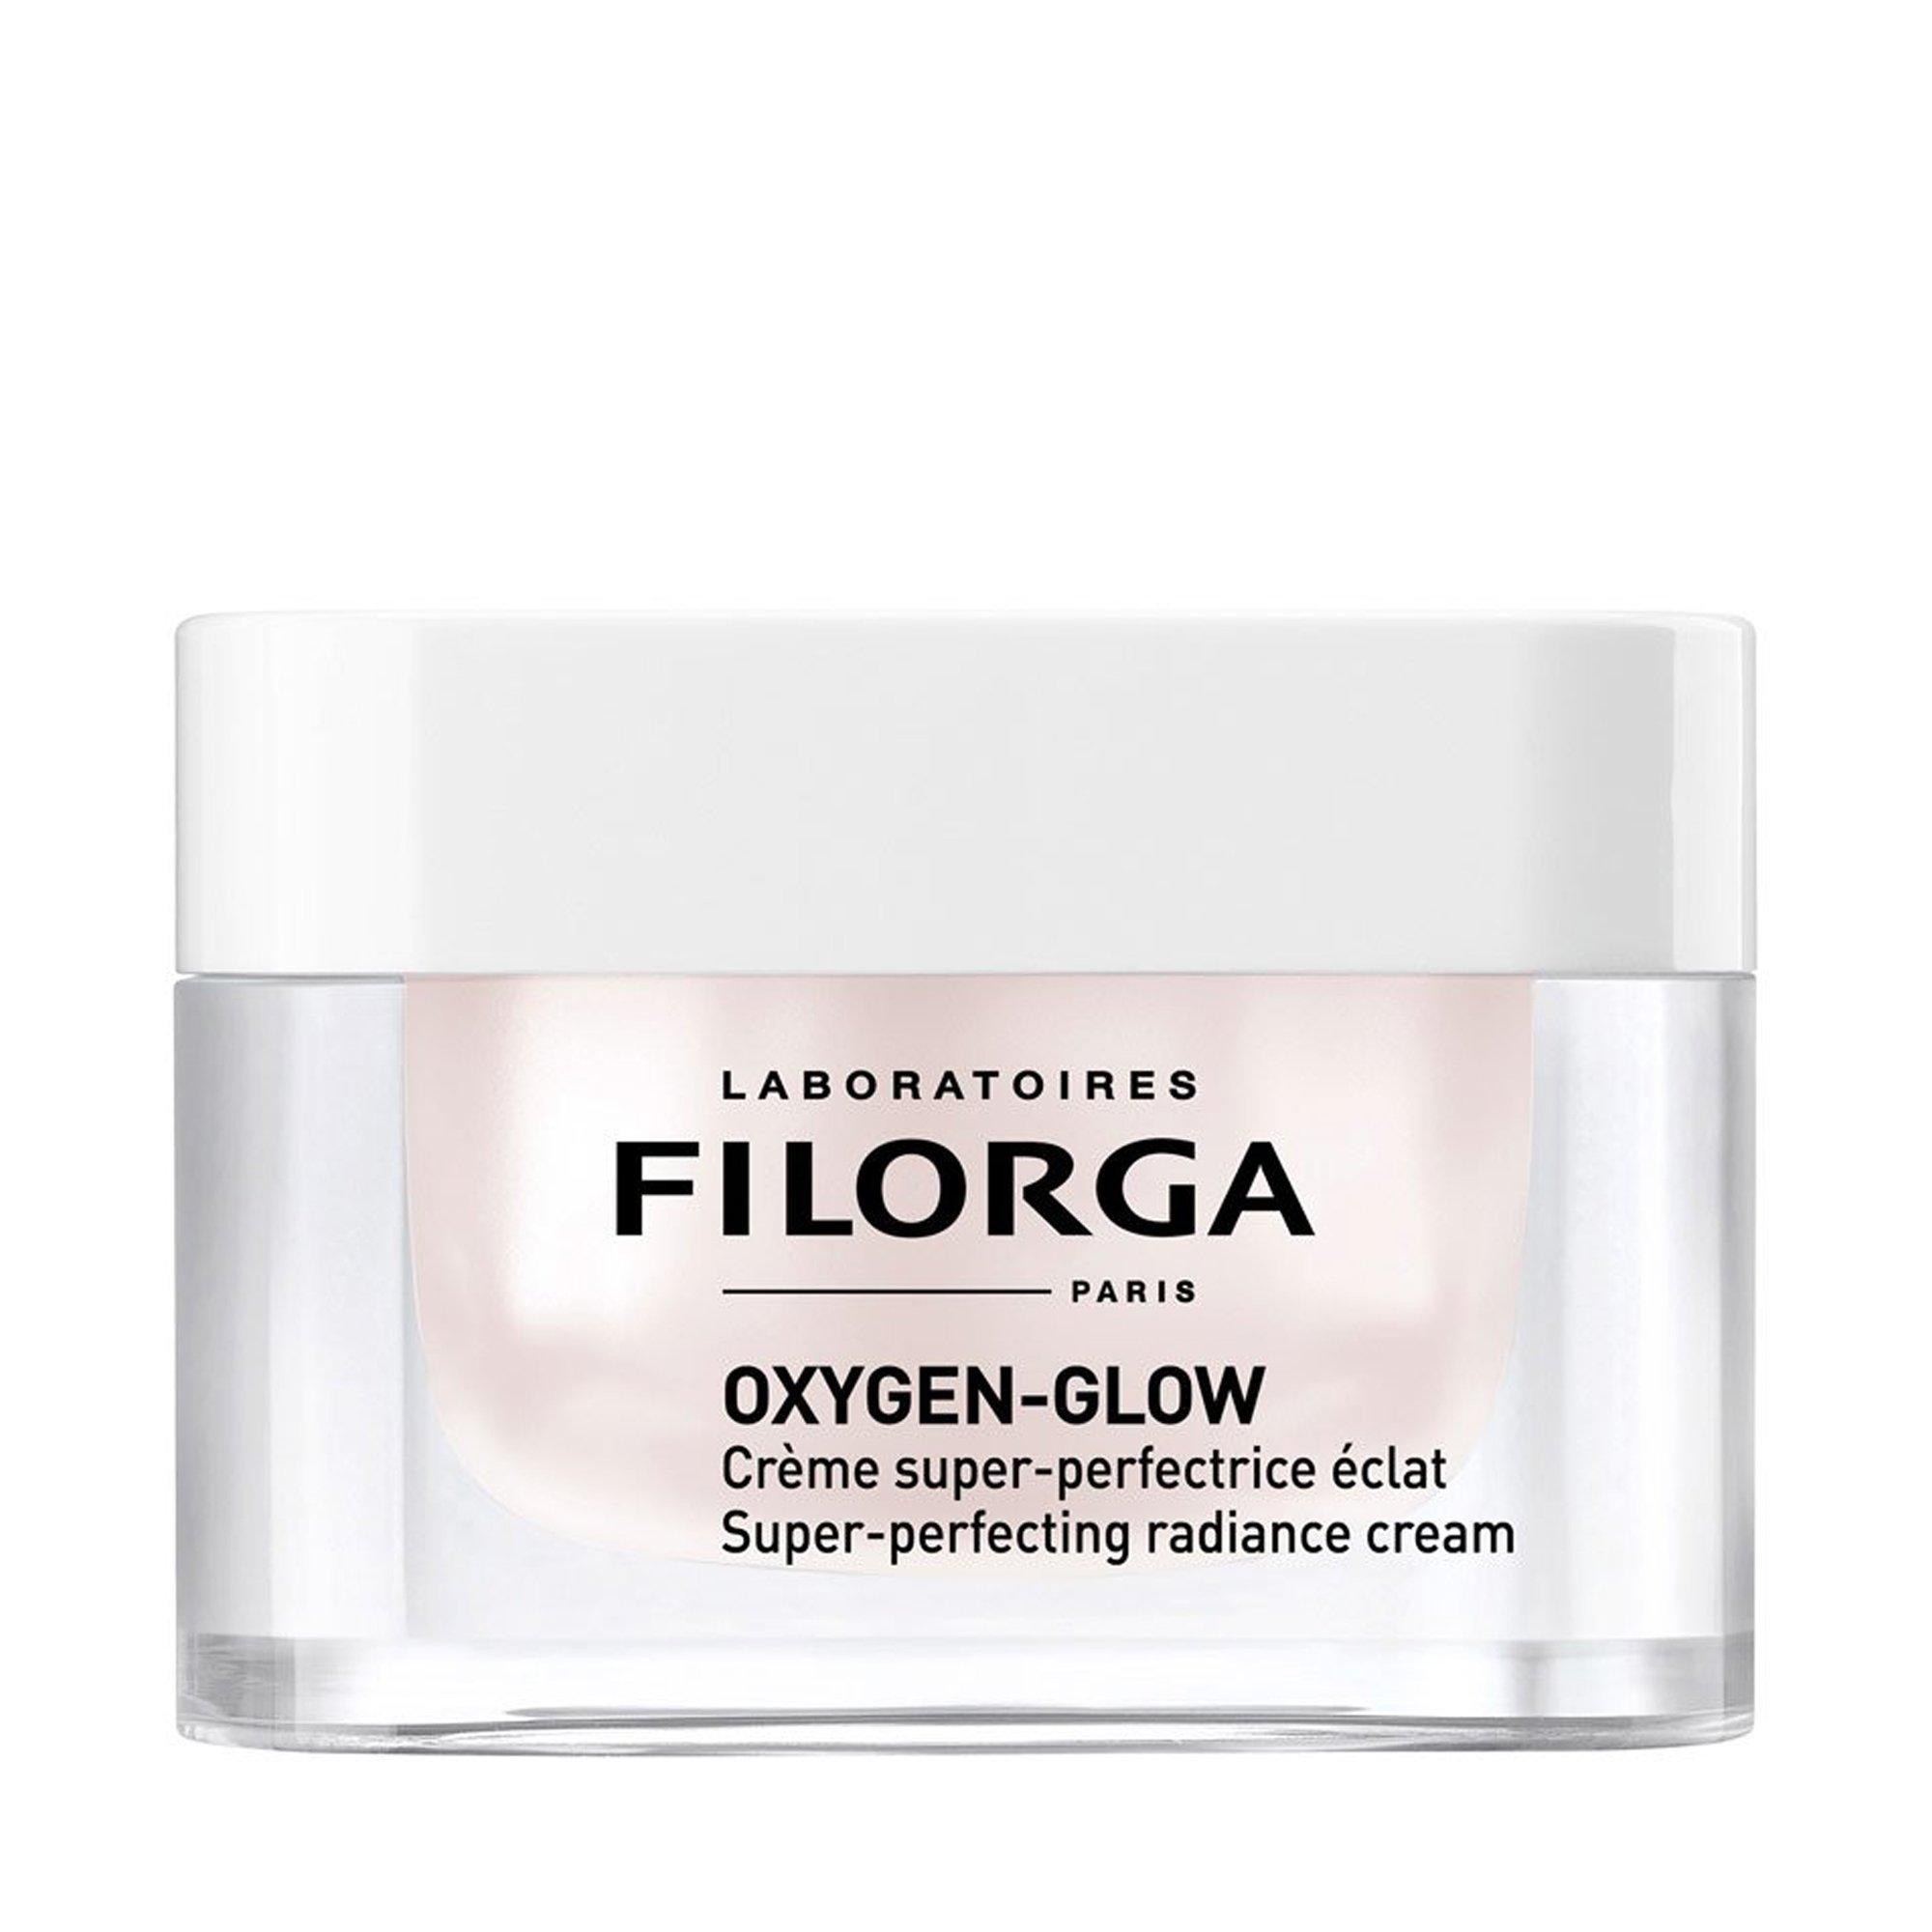 Image of Filorga Oxygen-Glow Super-Perfect cream Oxygen-Glow Super-Perfecting Radiance Cream - 50ml